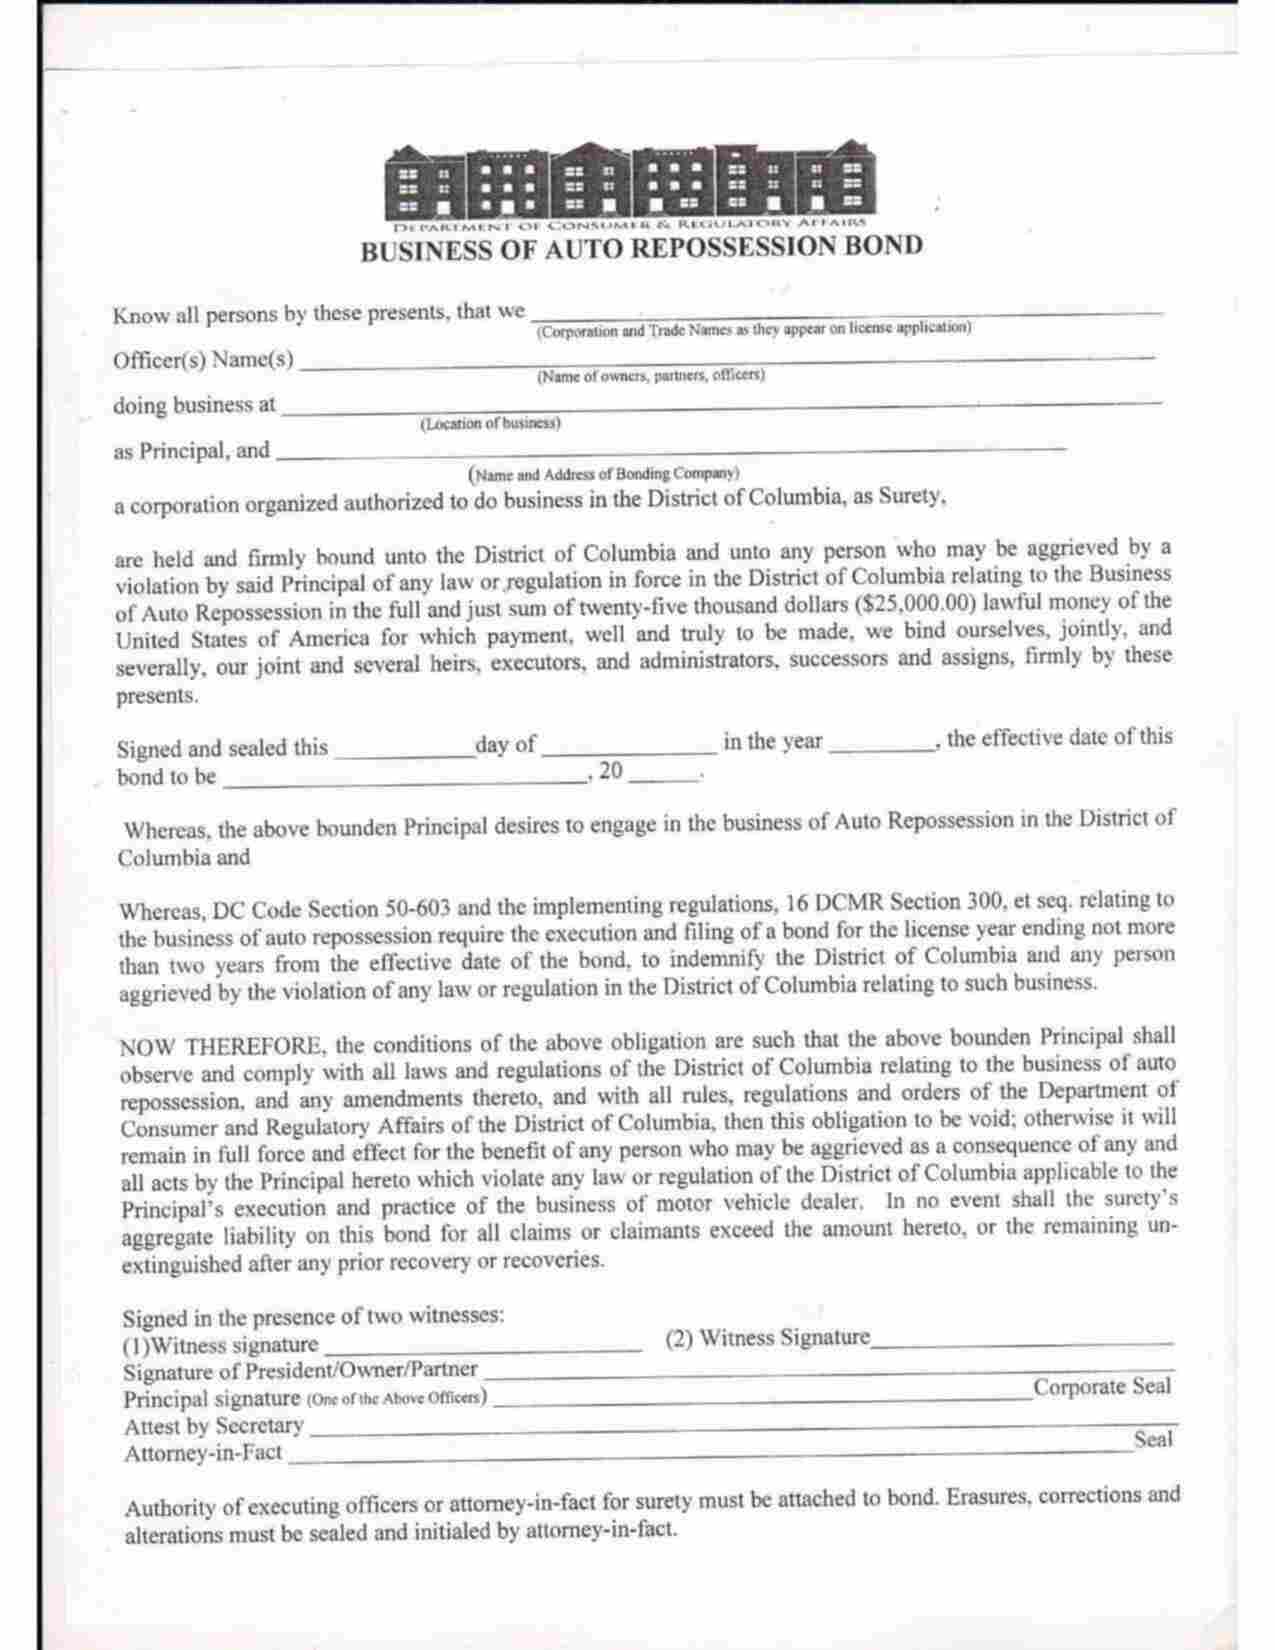 District of Columbia Automobile Repossessor Bond Form